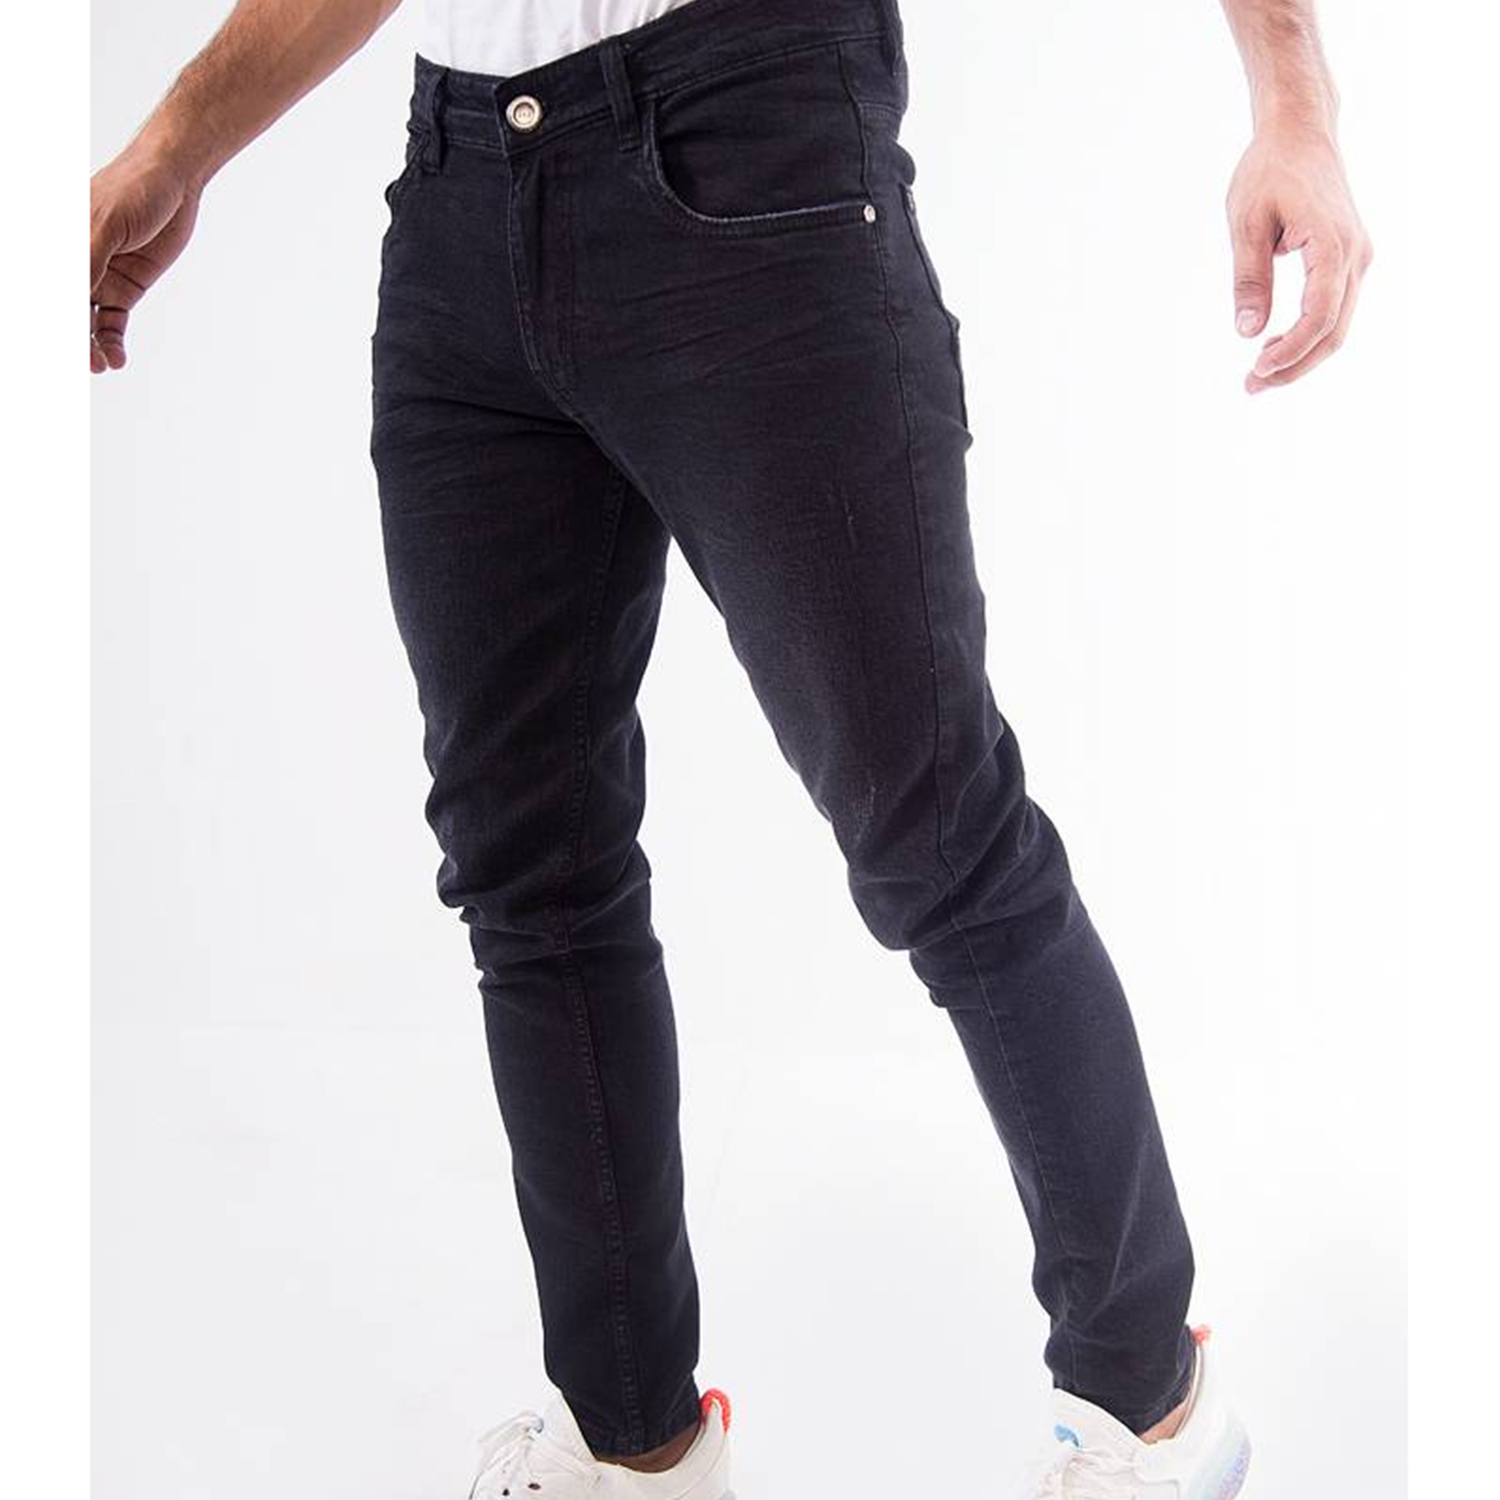 NZ-13009 Slim-fit Stretchable Denim Jeans Pant For Men - Deep Black ...